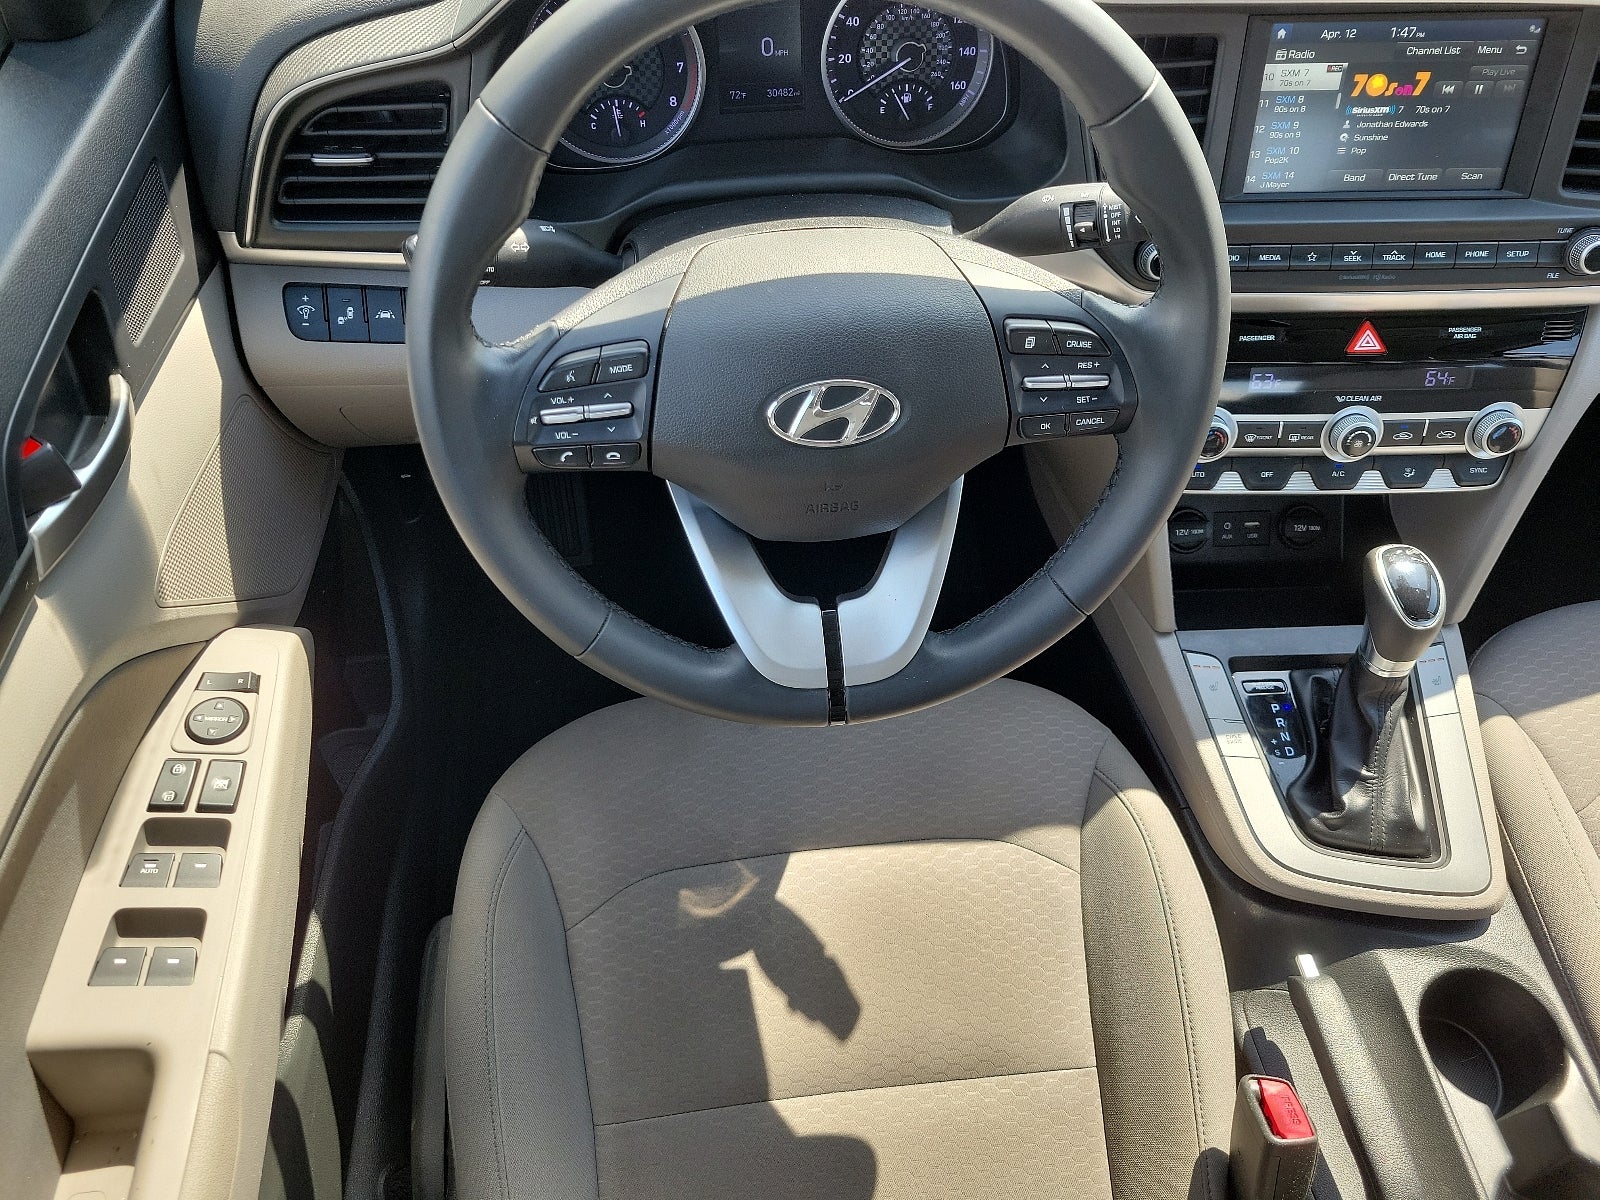 2020 Hyundai Elantra Value Edition FWD